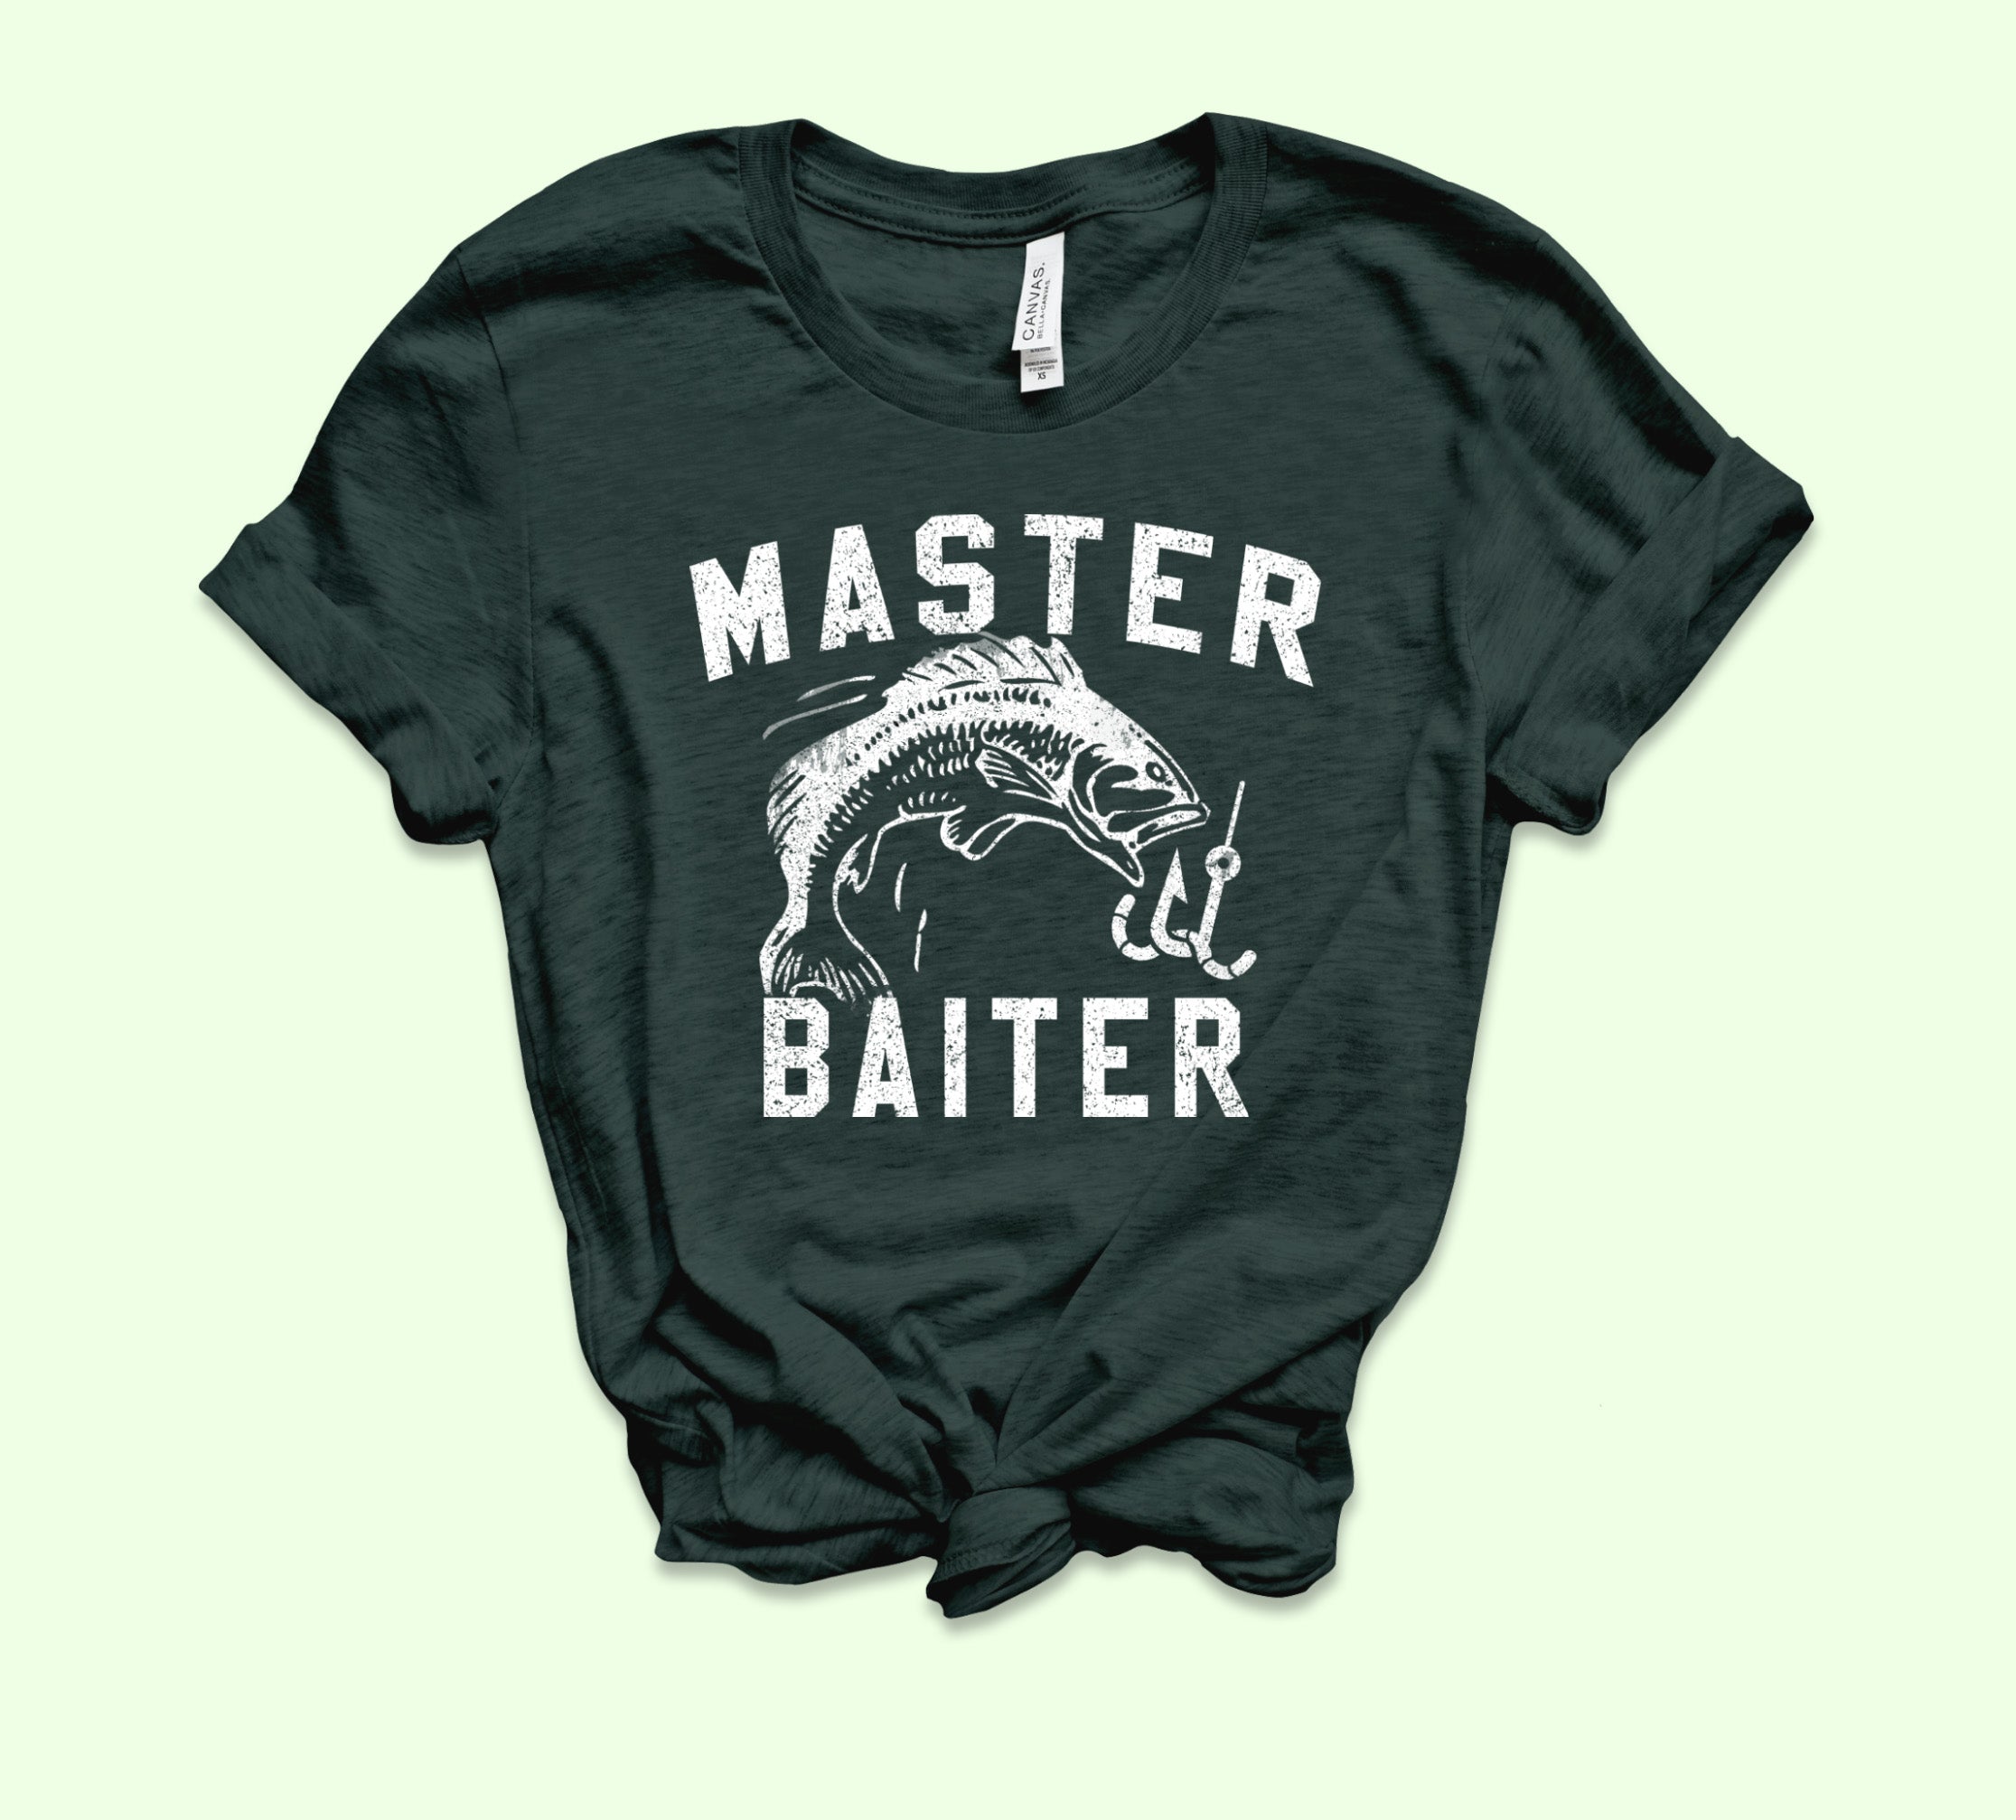 Master Baiter Shirt - Fishing Trip Shirt - Camp Shirt - Lake Tee - HighCiti 3XL / Black